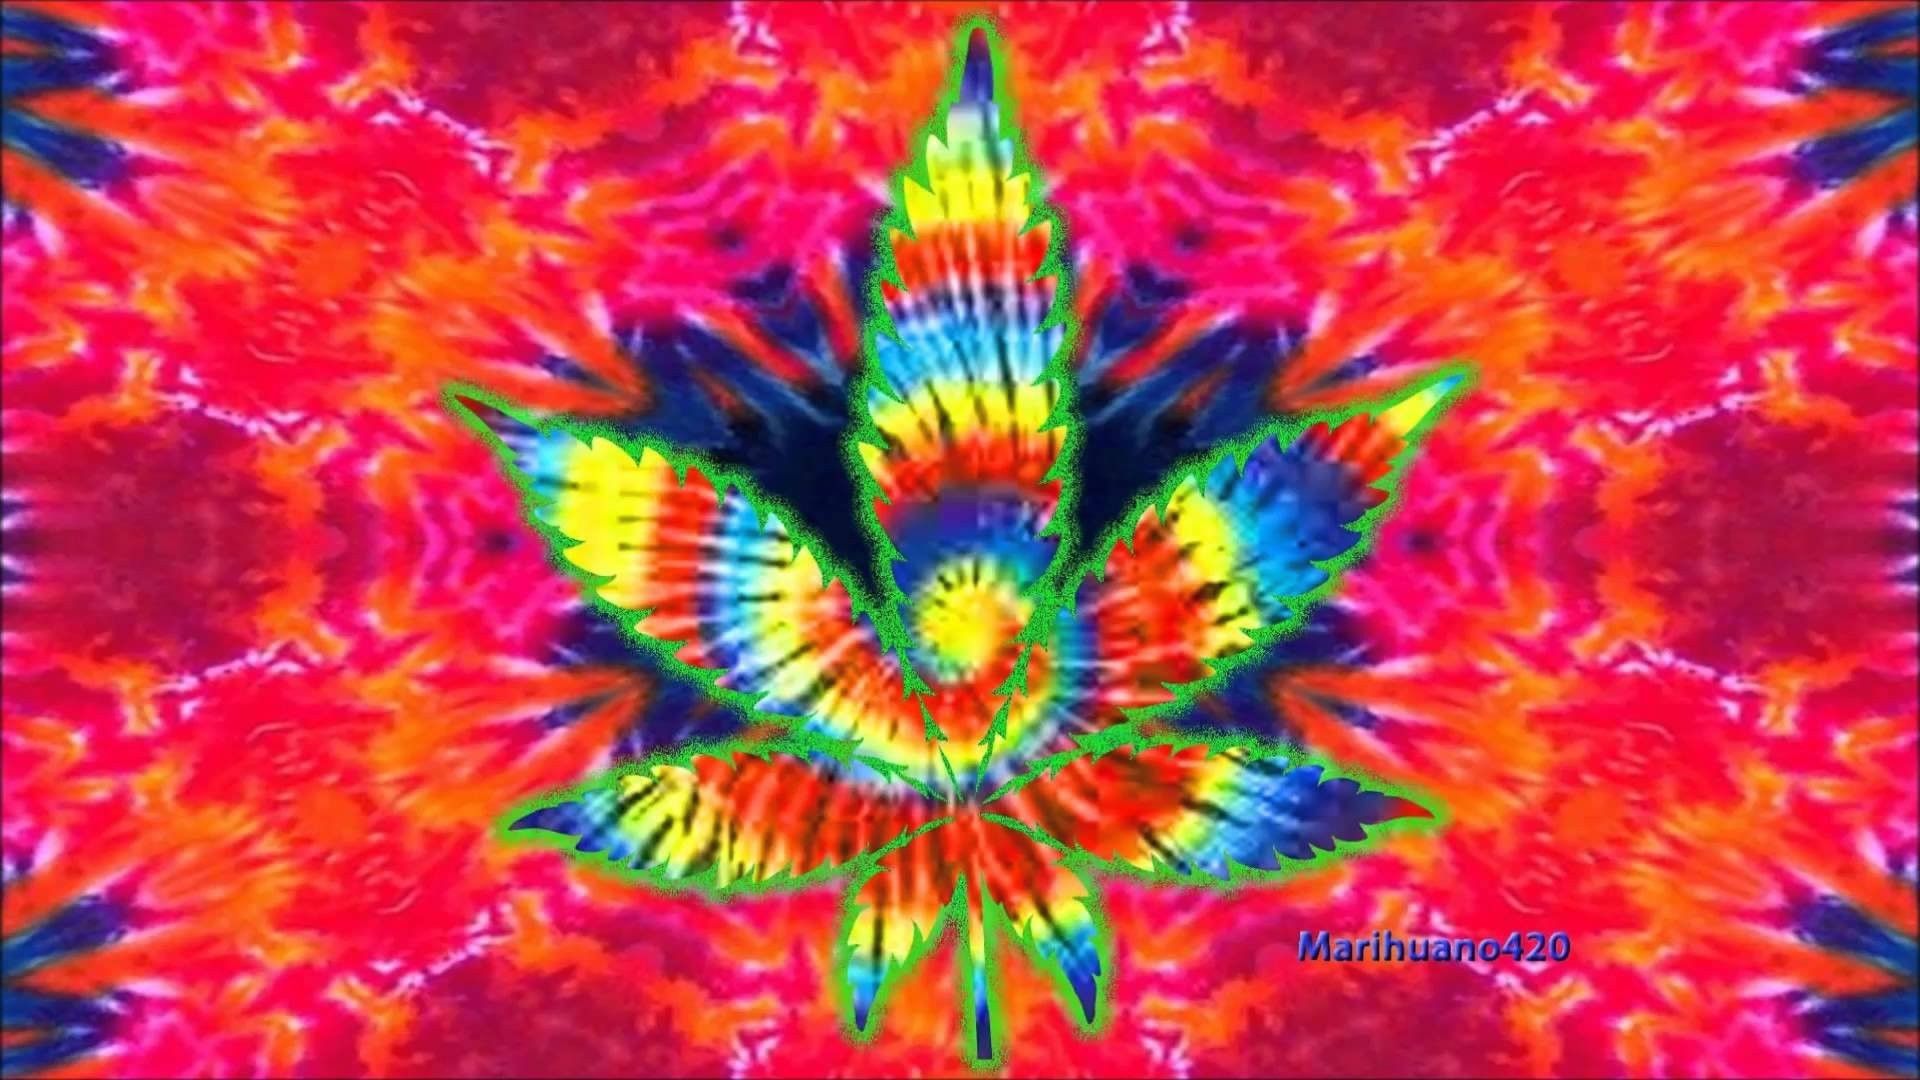 Abstract Wallpaper, Drugs, Marijuana, Psychedelic, Digital, Weed